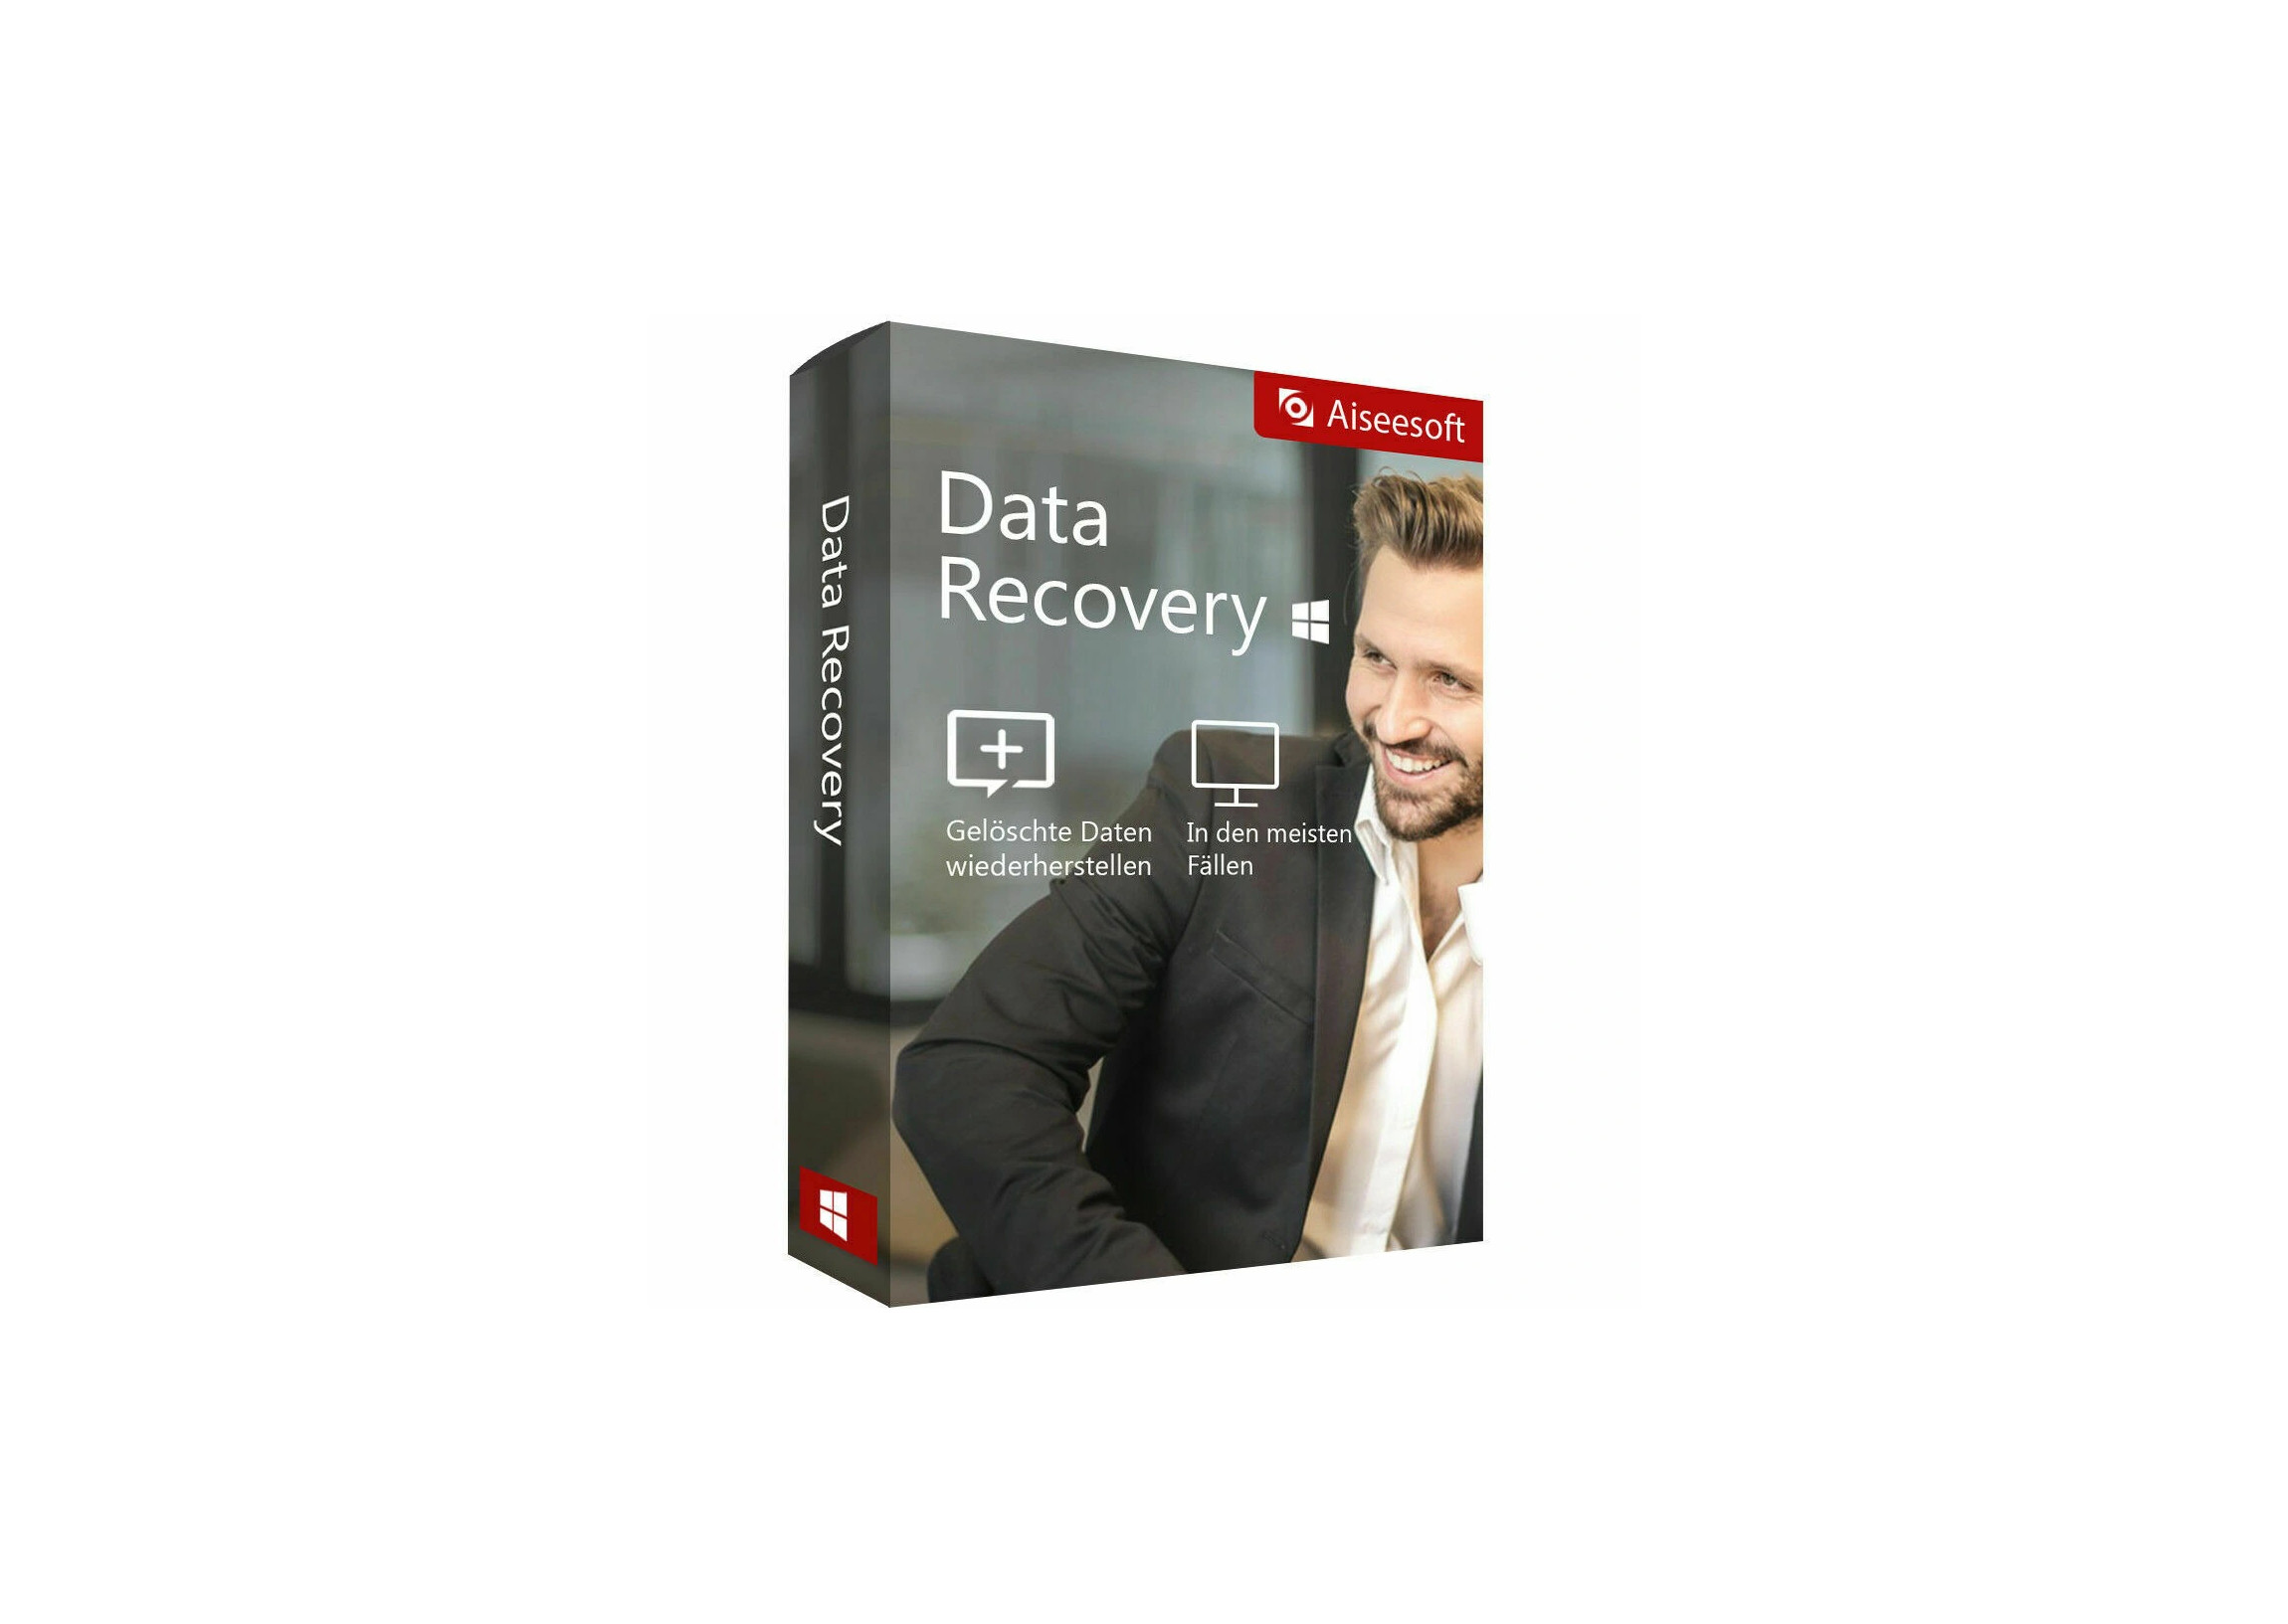 Aiseesoft Data Recovery Key (1 Year / 1 PC)